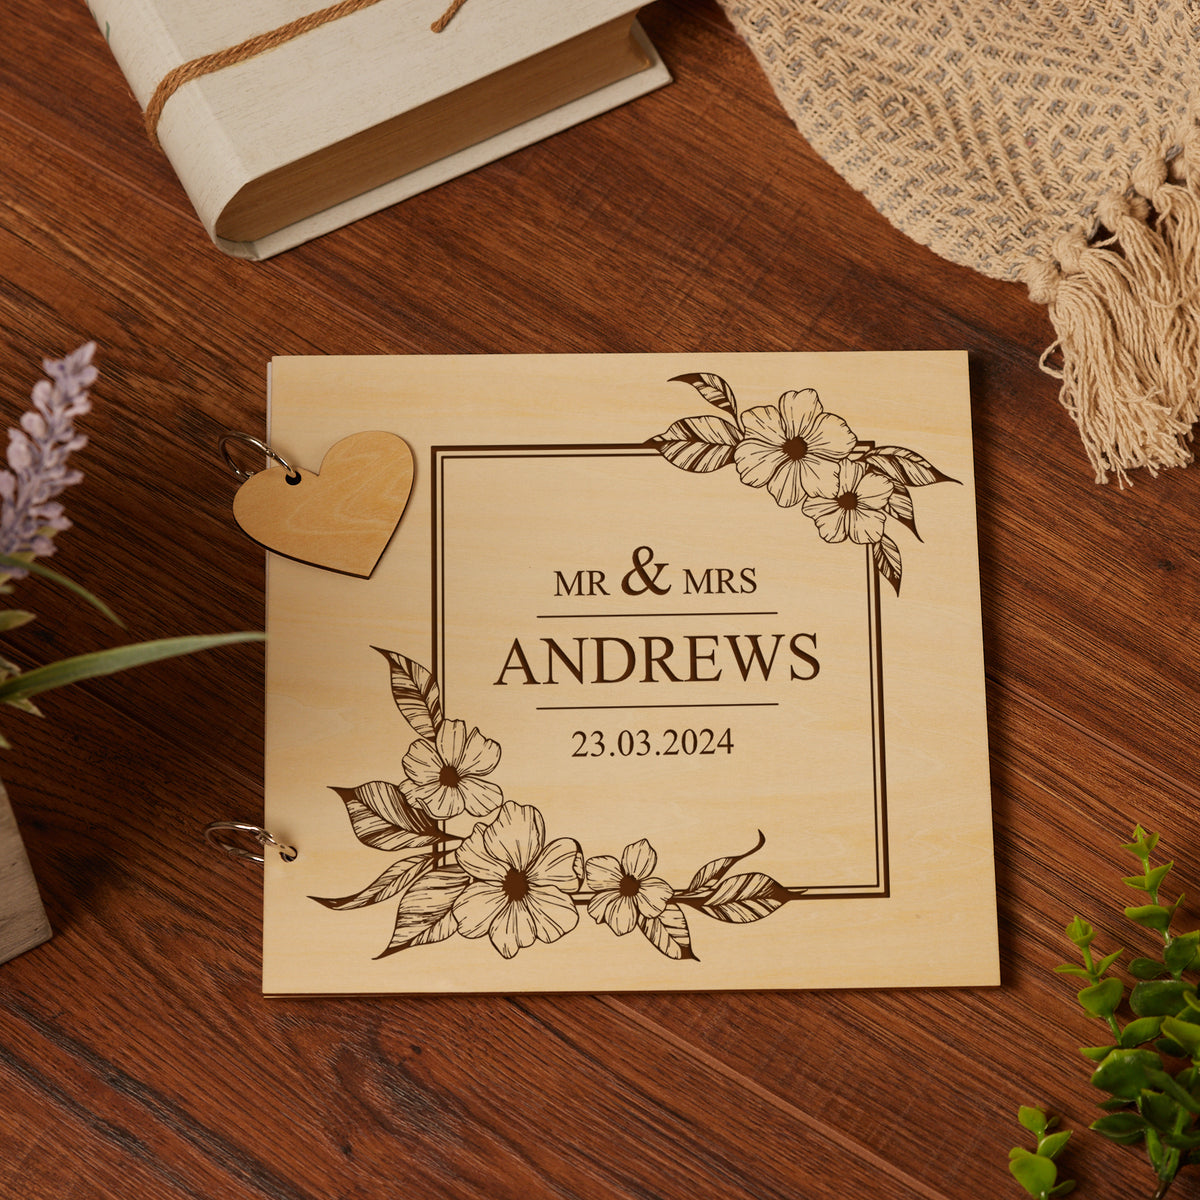 Personalised Engraved Wedding Guest Book or Scrapbook Floral Design